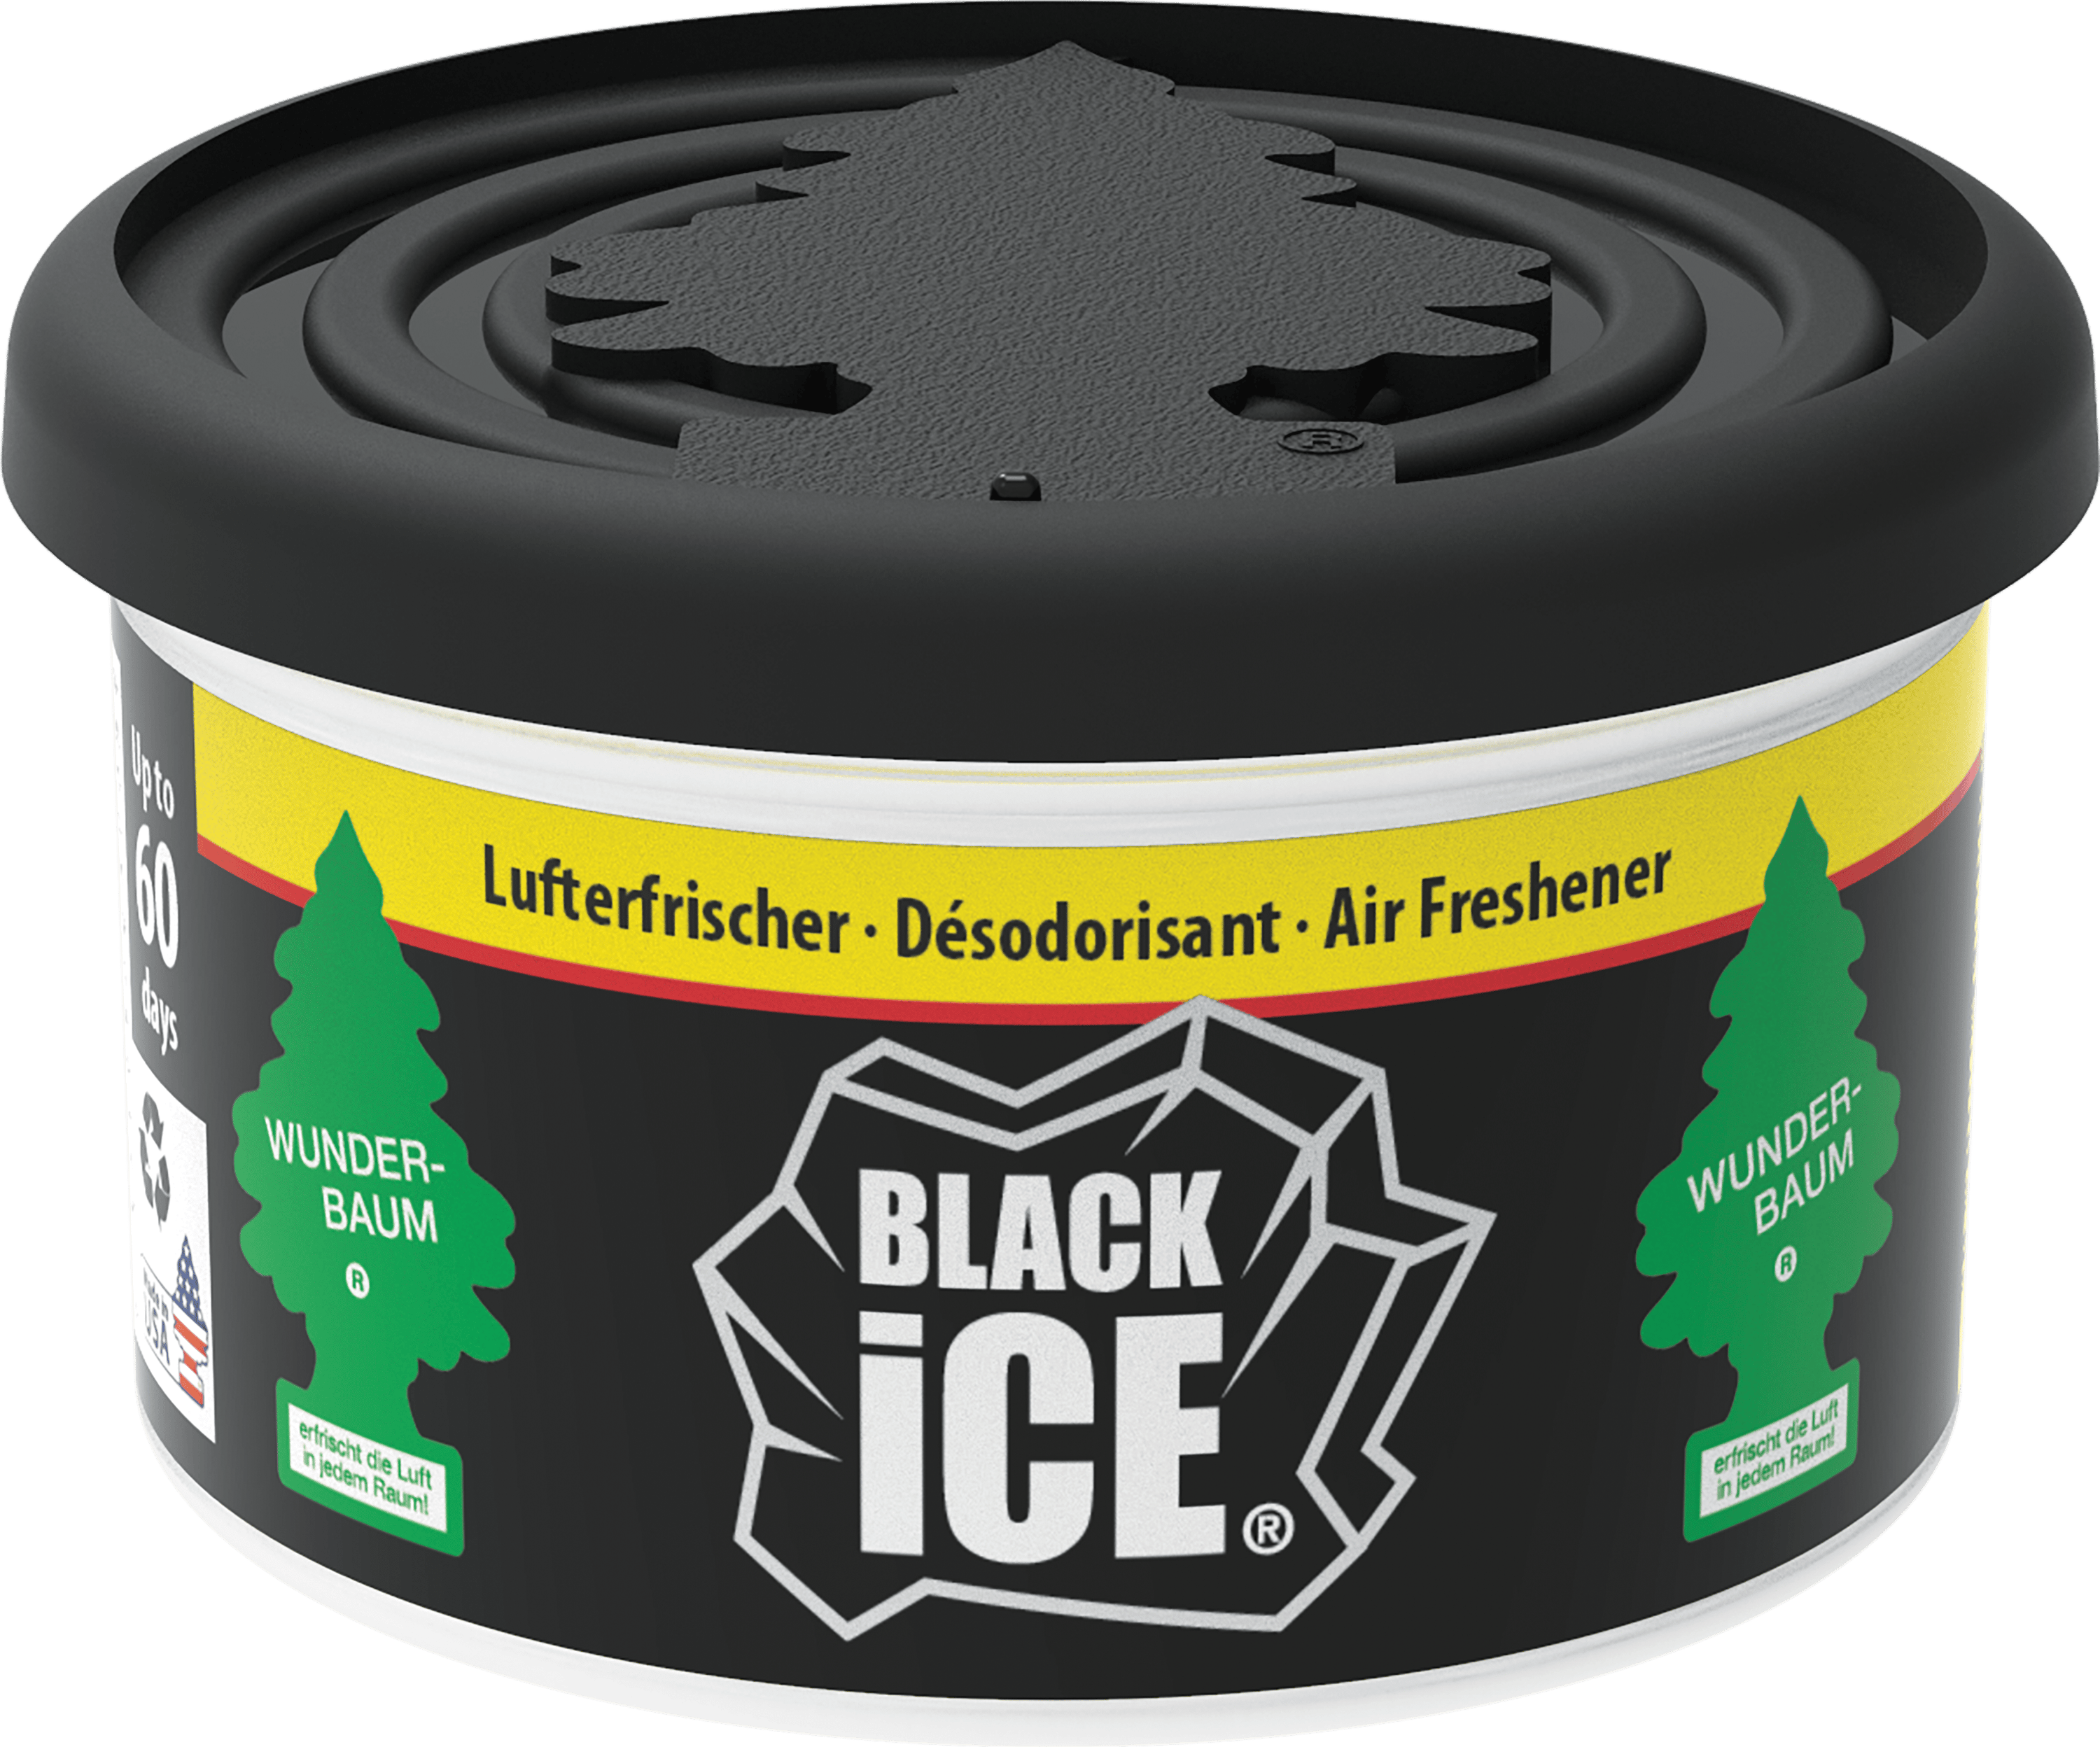 Wunderbaum Duftdose Black Ice